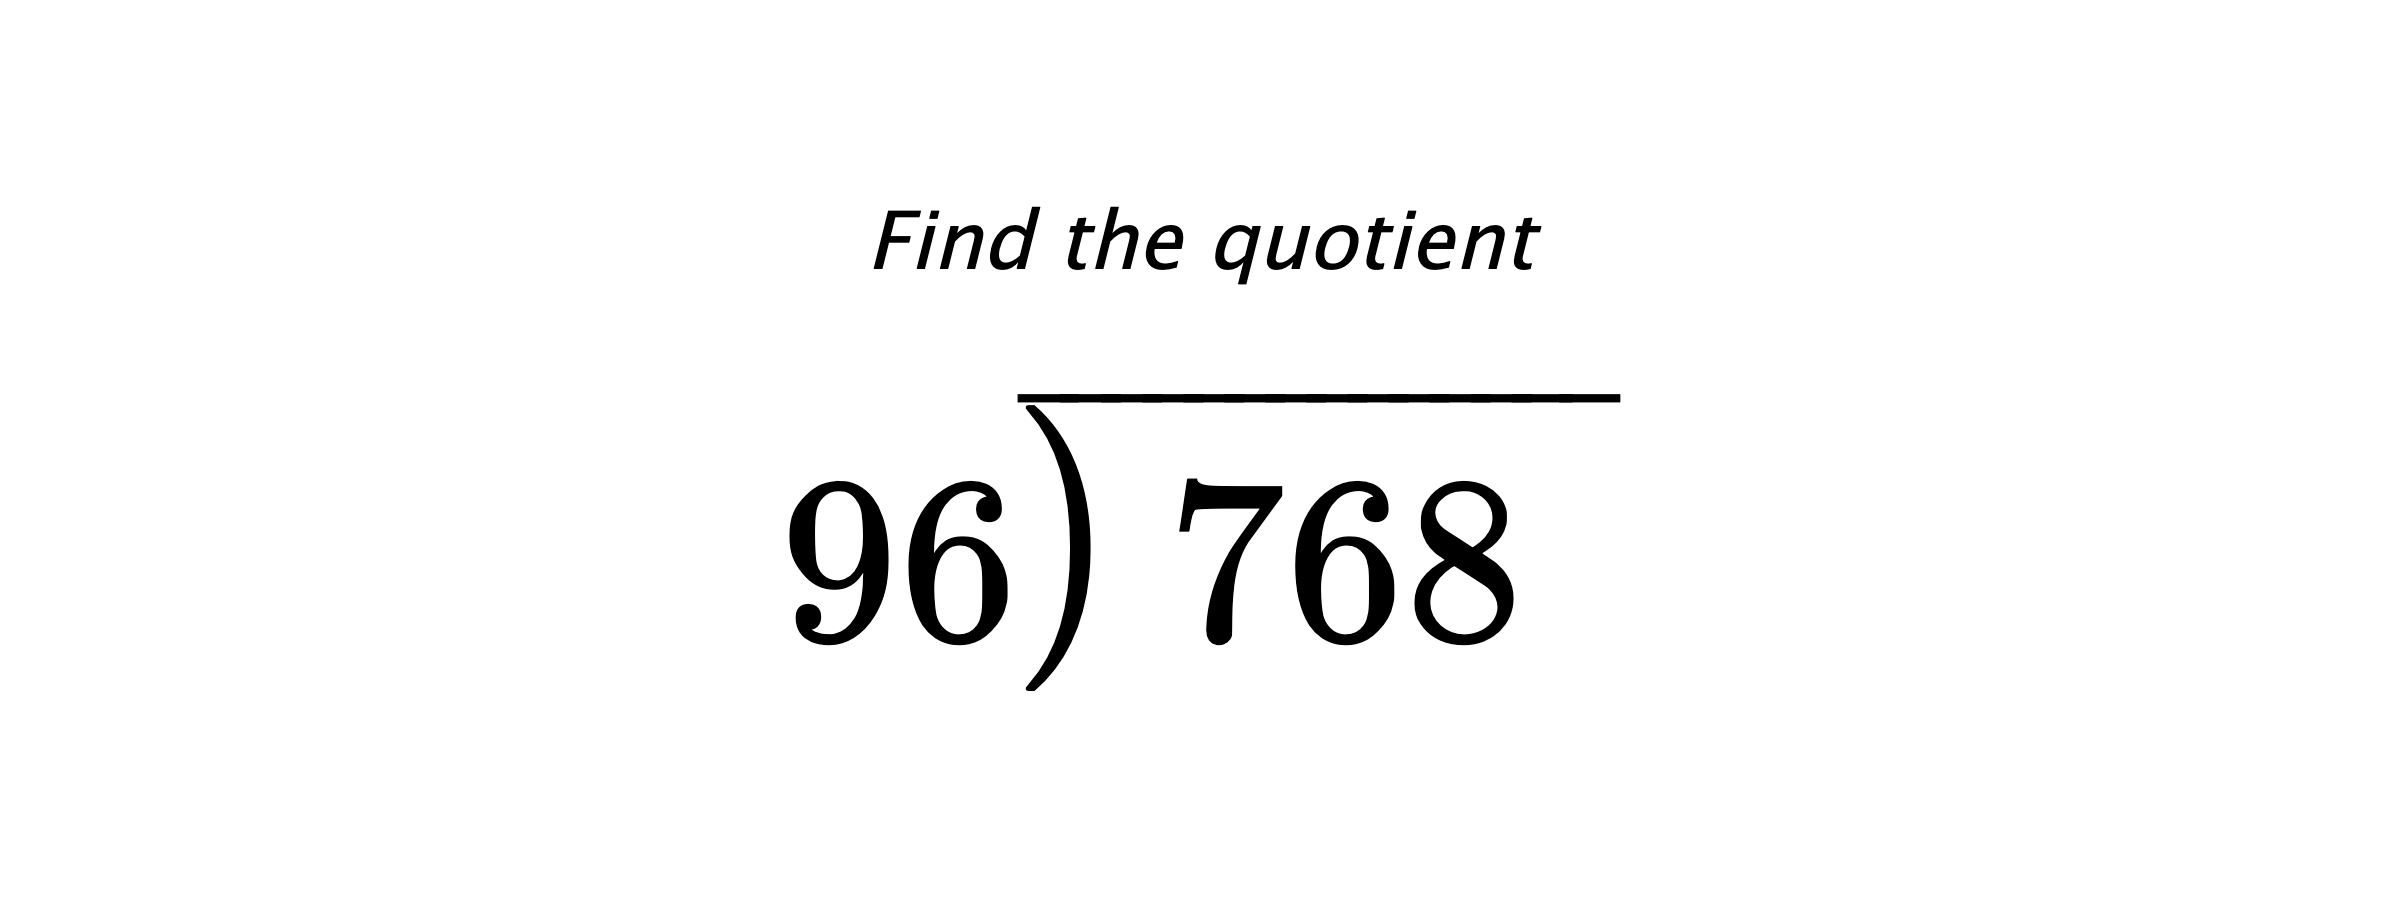 Find the quotient $ 96{\overline{\smash{\raise.3ex\hbox{$\big)$}}\,768\phantom{)}}} $